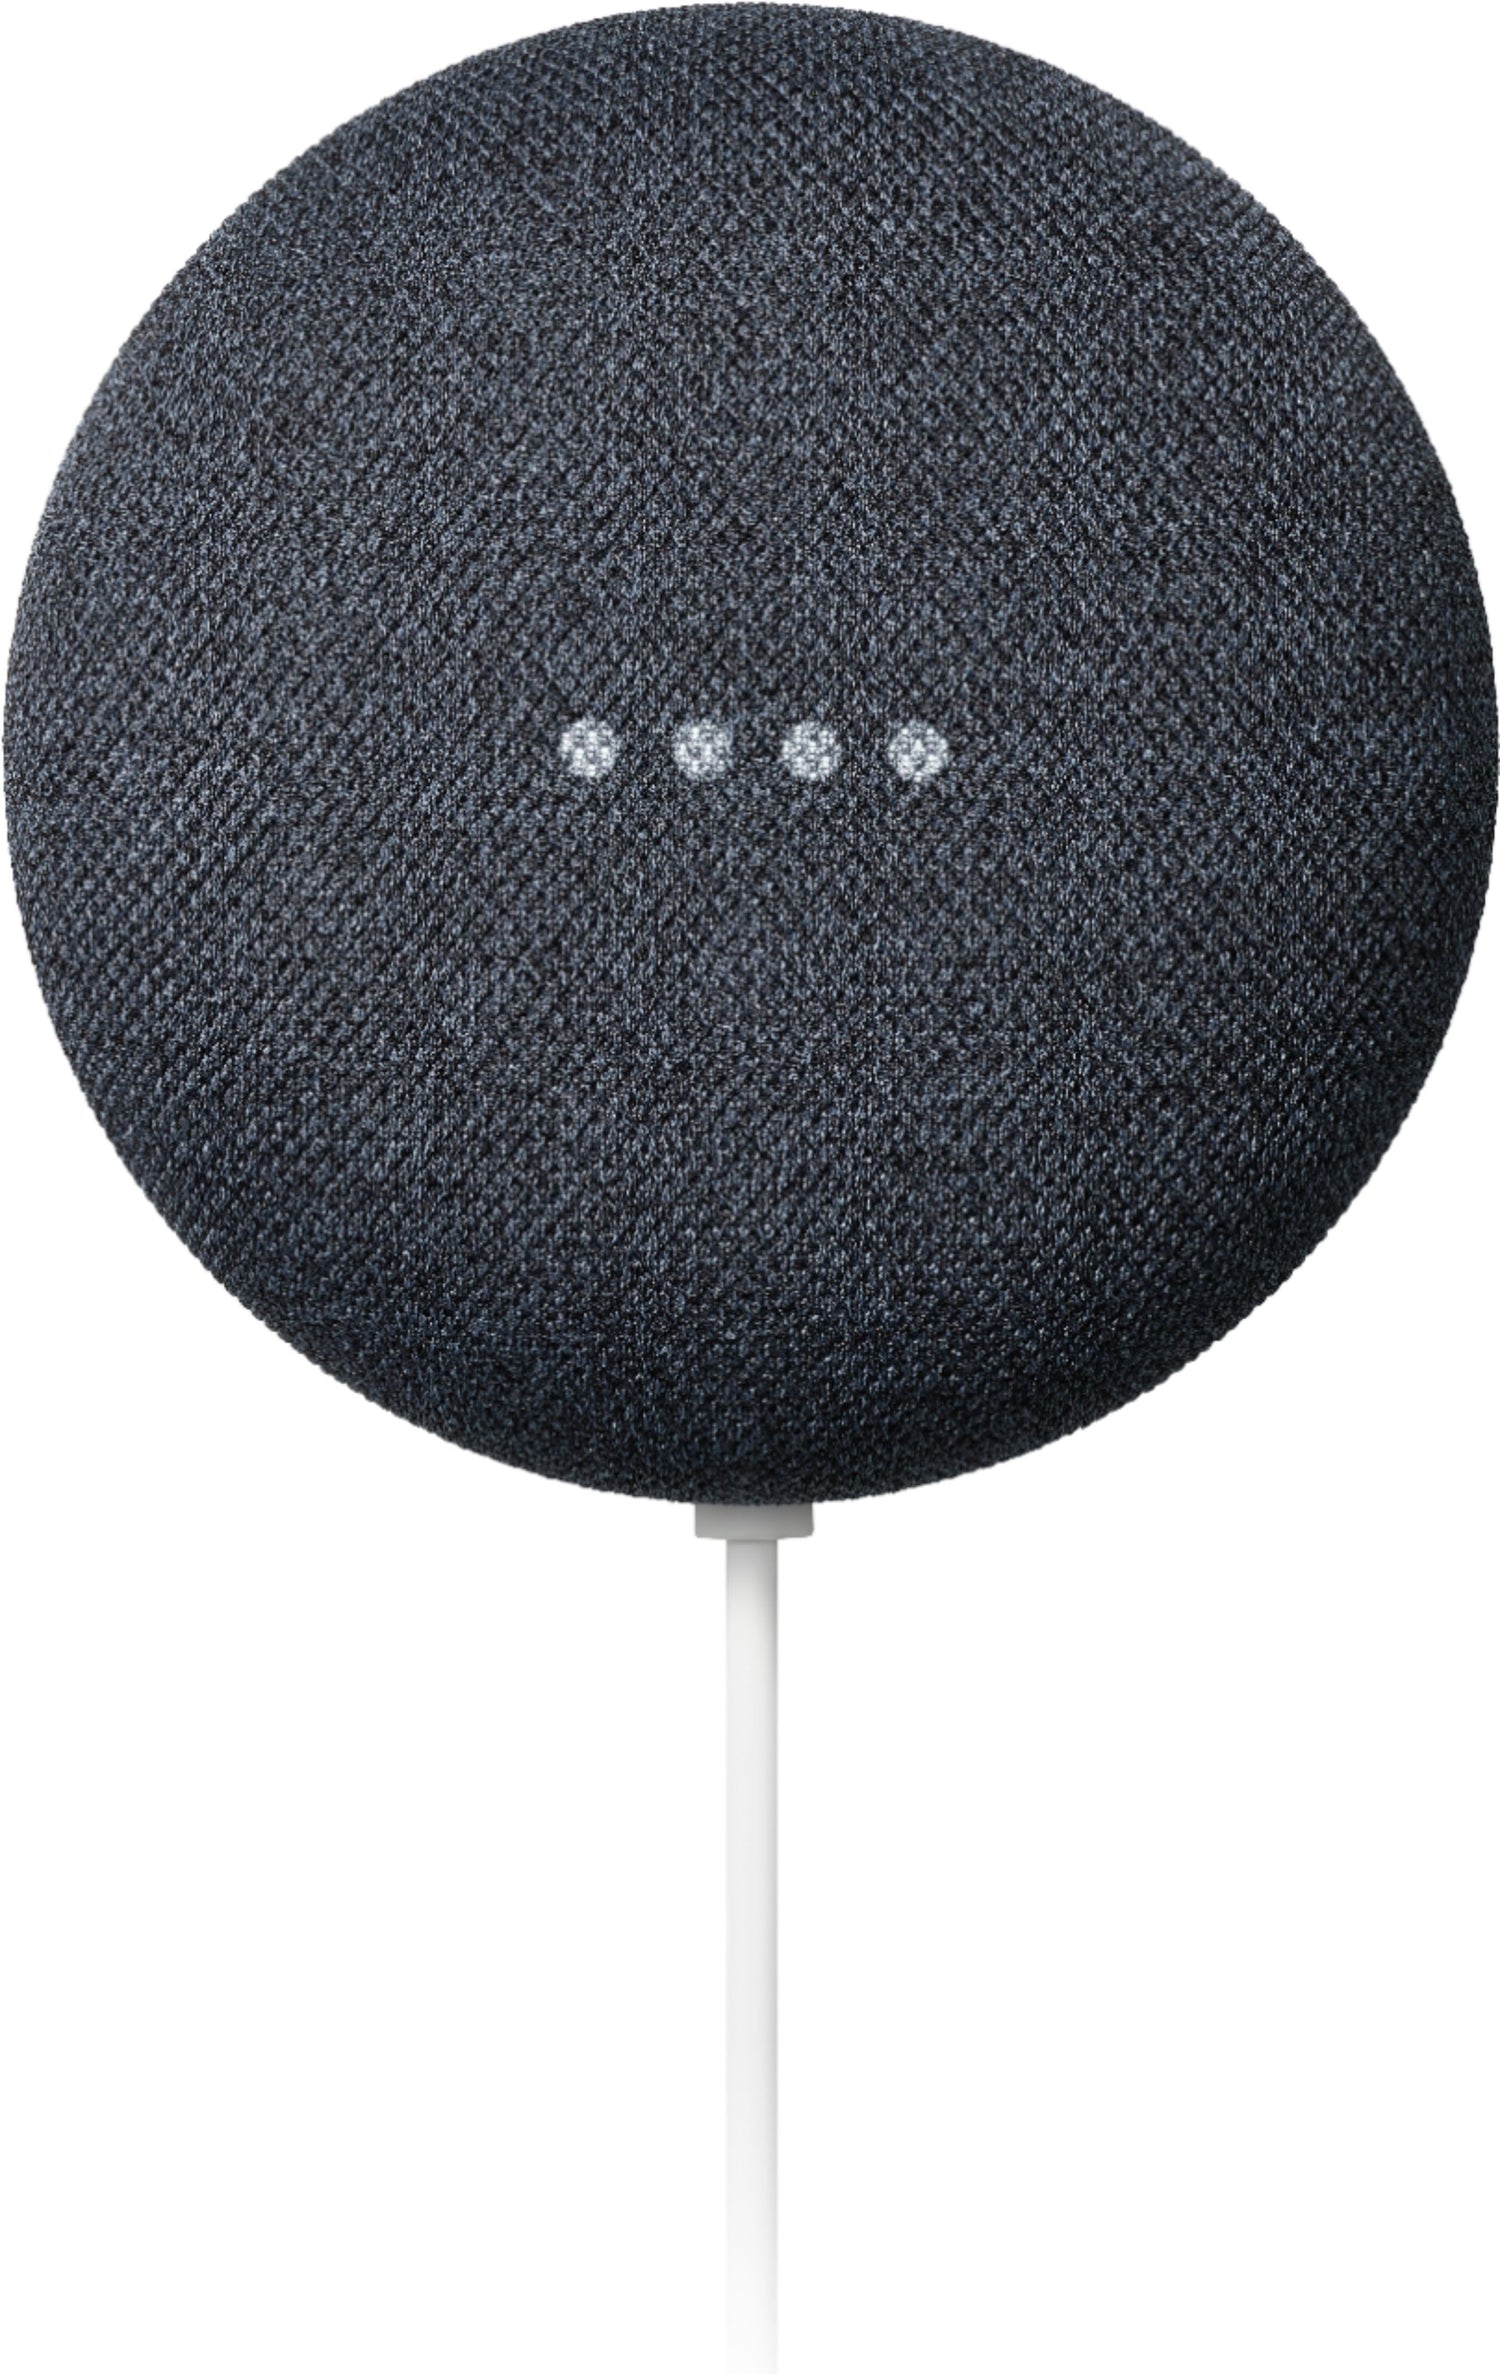 Google Nest Mini 2nd Generation Smart Speaker with Google Assistant - Charcoal (Certified Refurbished)